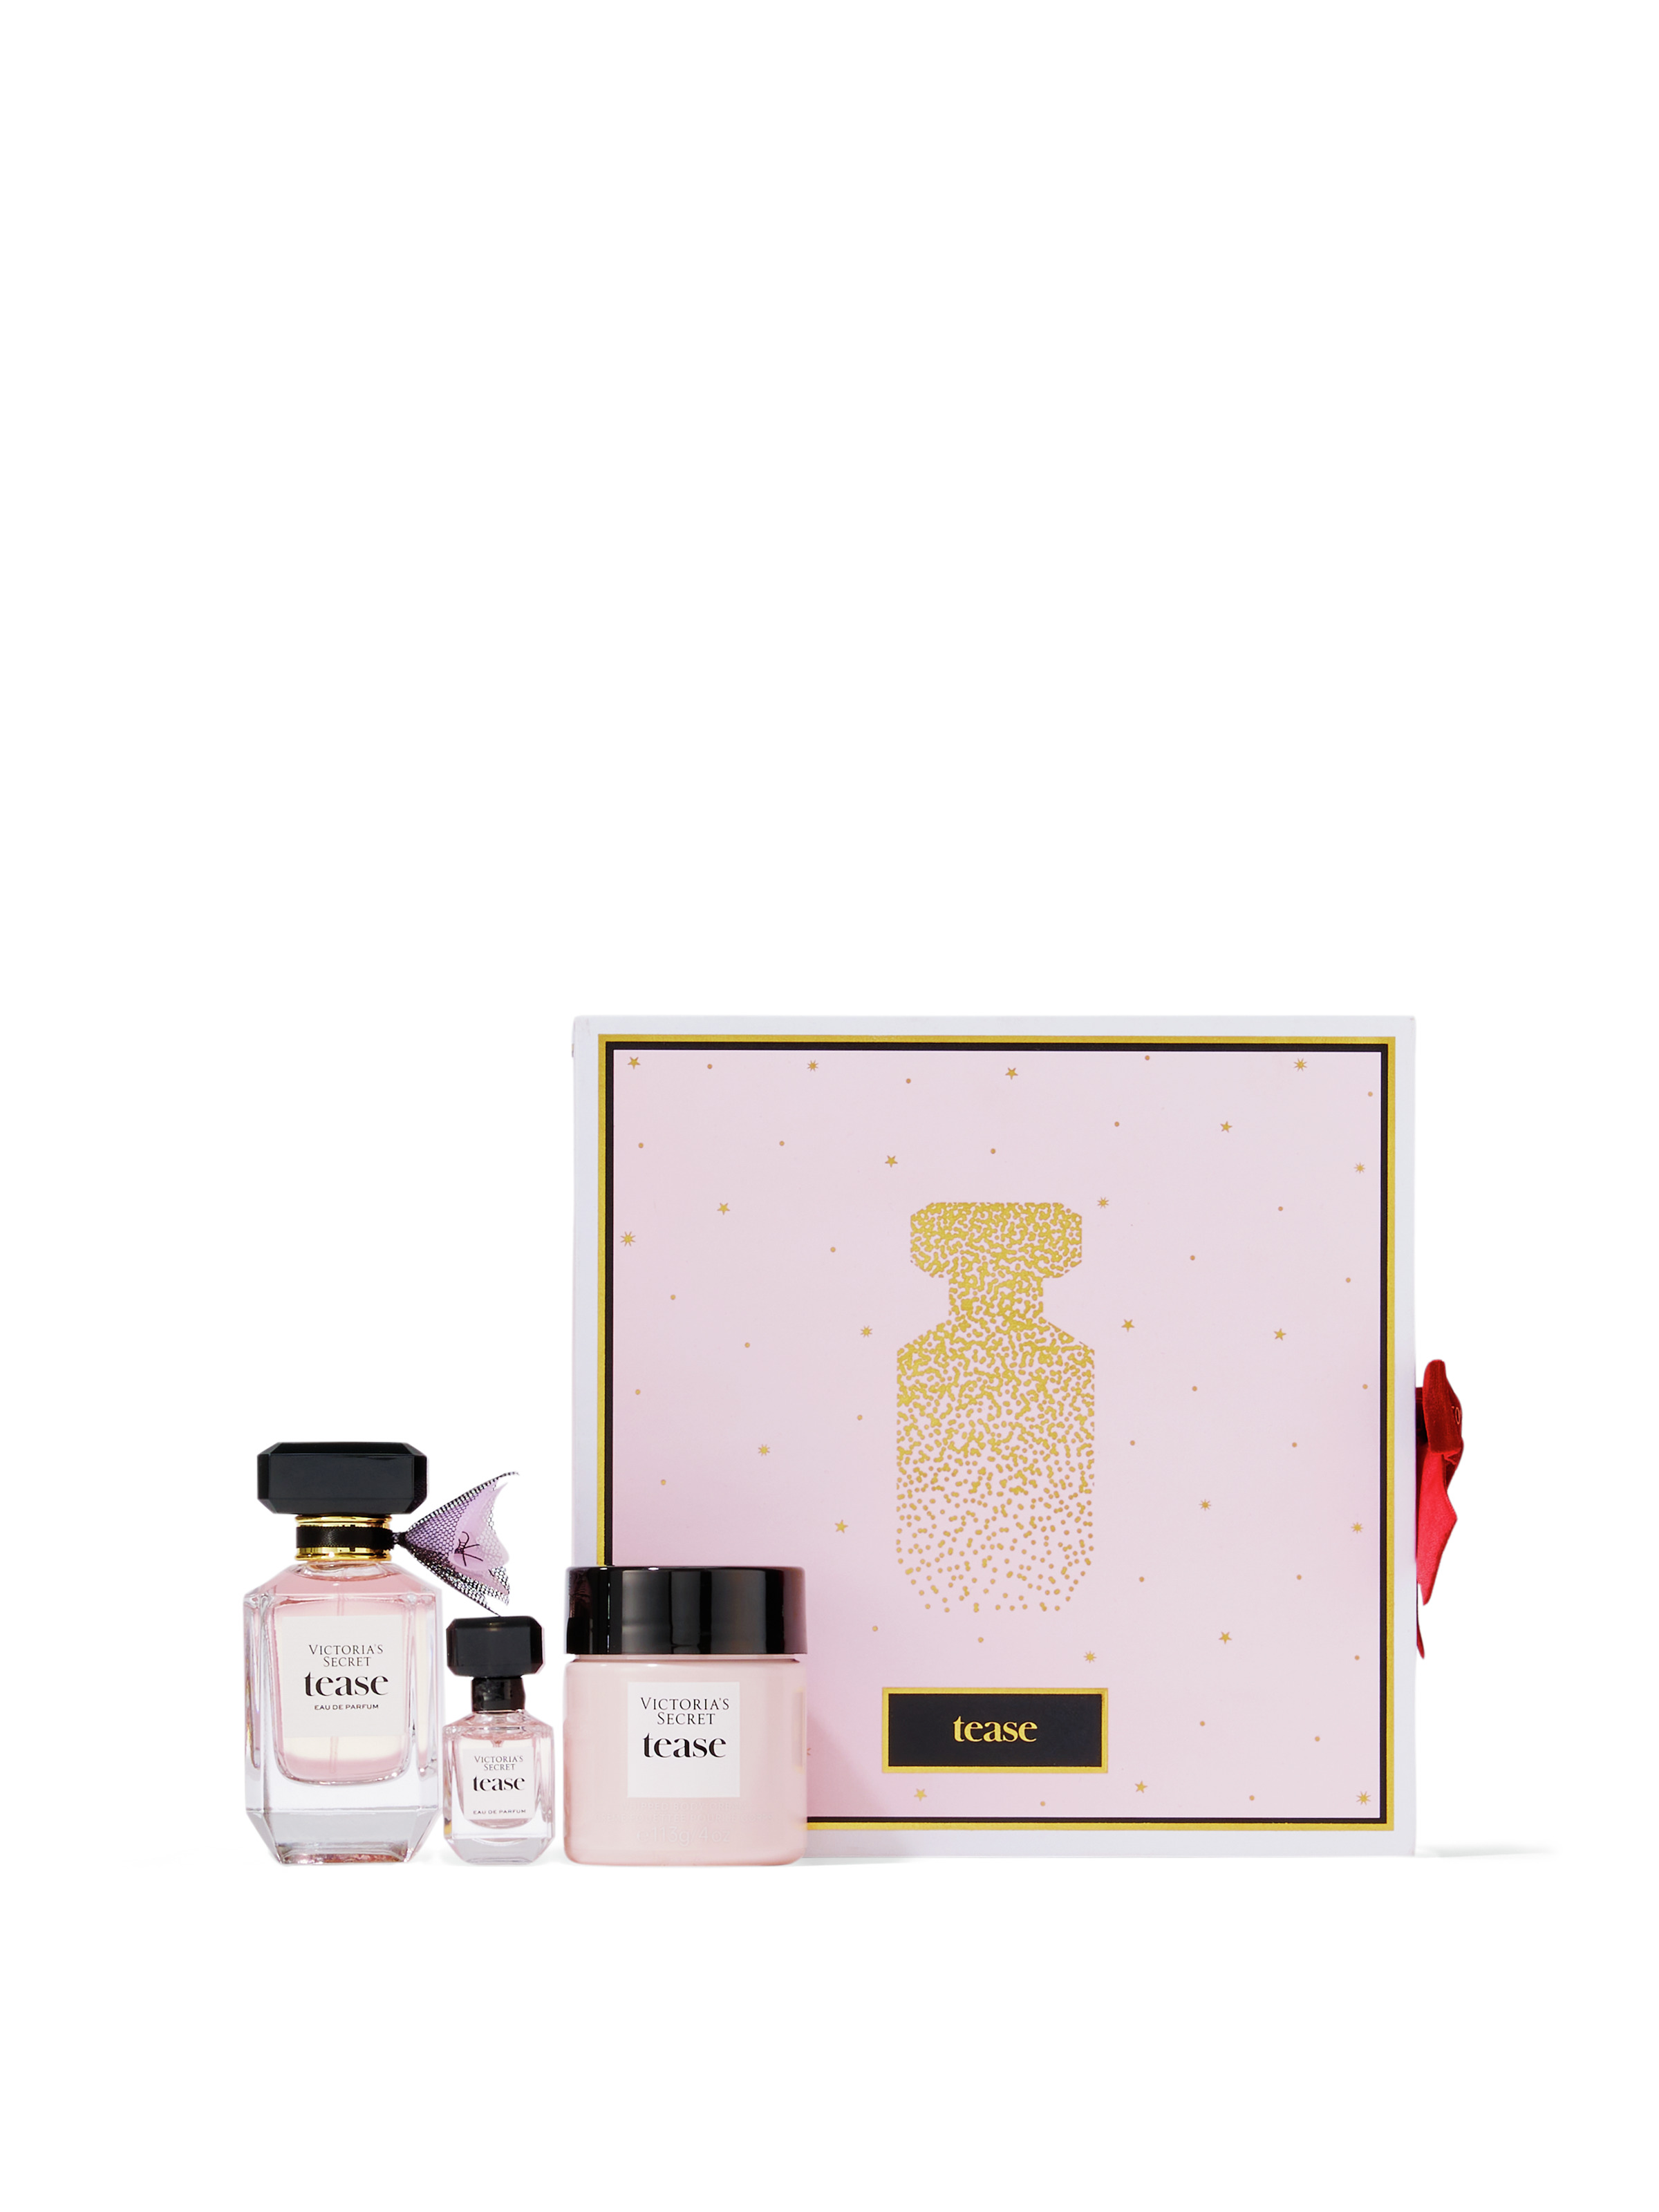 Tease Luxe Fragrance Gift